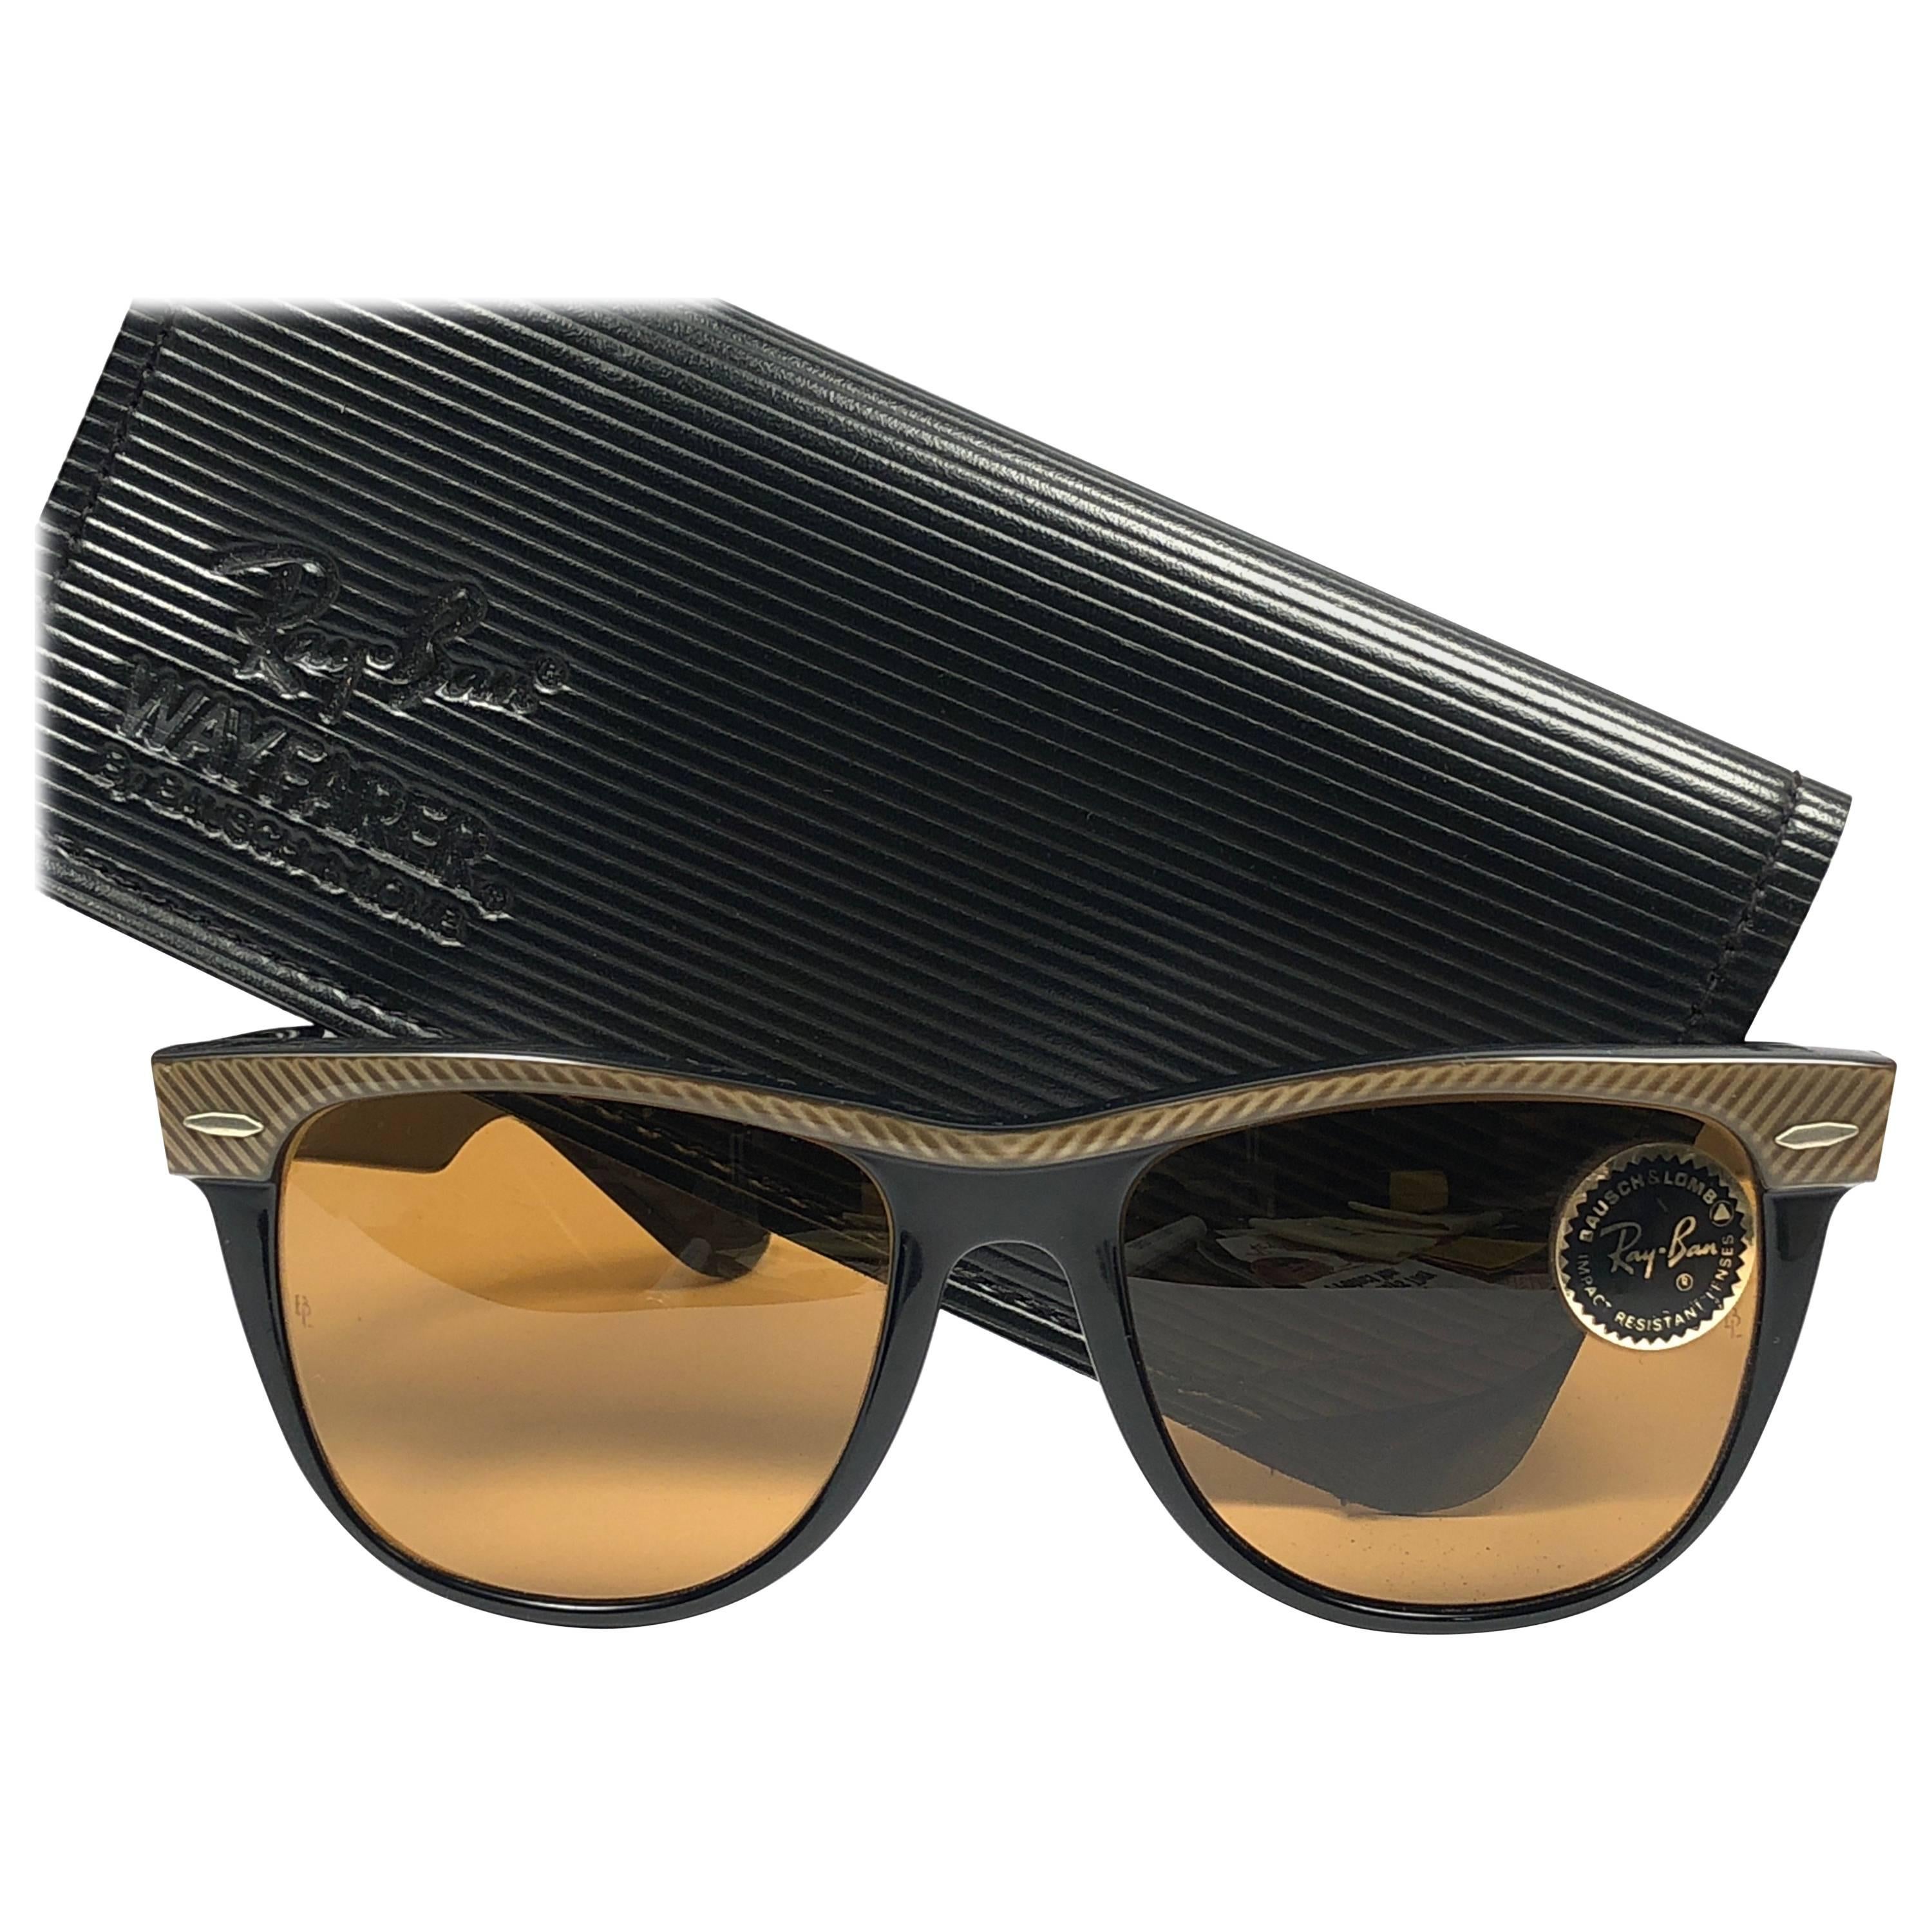 New Ray Ban The Wayfarer II Copper & Black Amber Lenses USA 80's Sunglasses